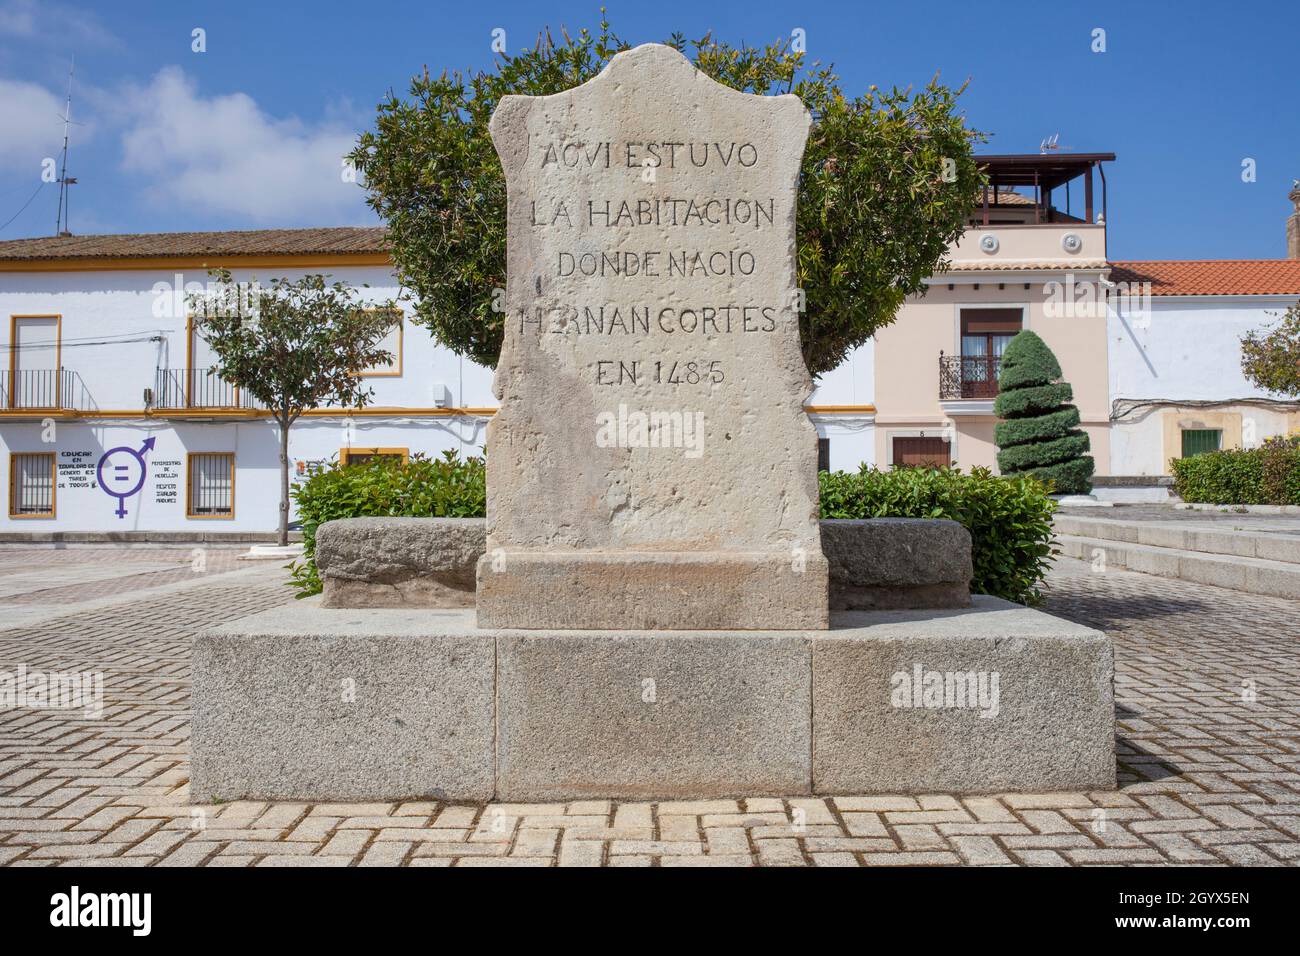 Medellin, Espagne - 3 avril 2021 : Pierre commémorative pointant la salle Hernan Cortes, Aztec Empire Espagnol Conquistador, Medellin, Estrémadure, Espagne Banque D'Images